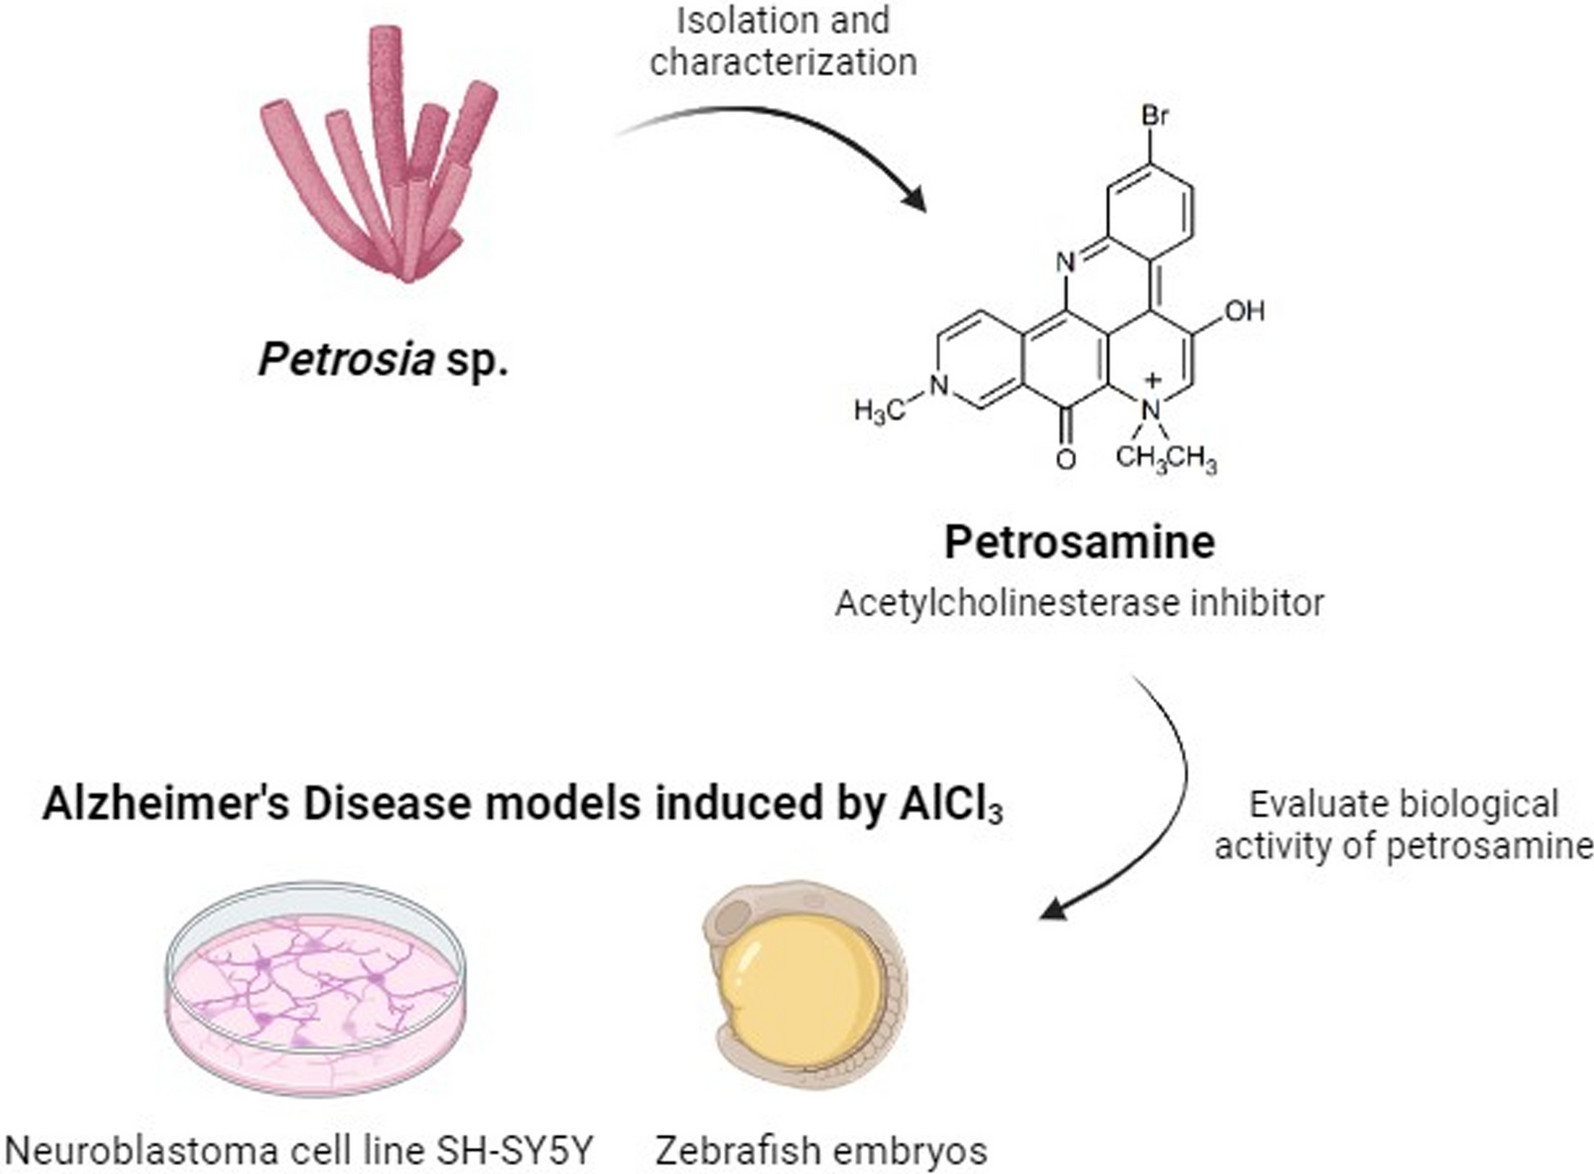 Petrosamine isolated from marine sponge Petrosia sp. demonstrates protection against neurotoxicity in vitro and in vivo